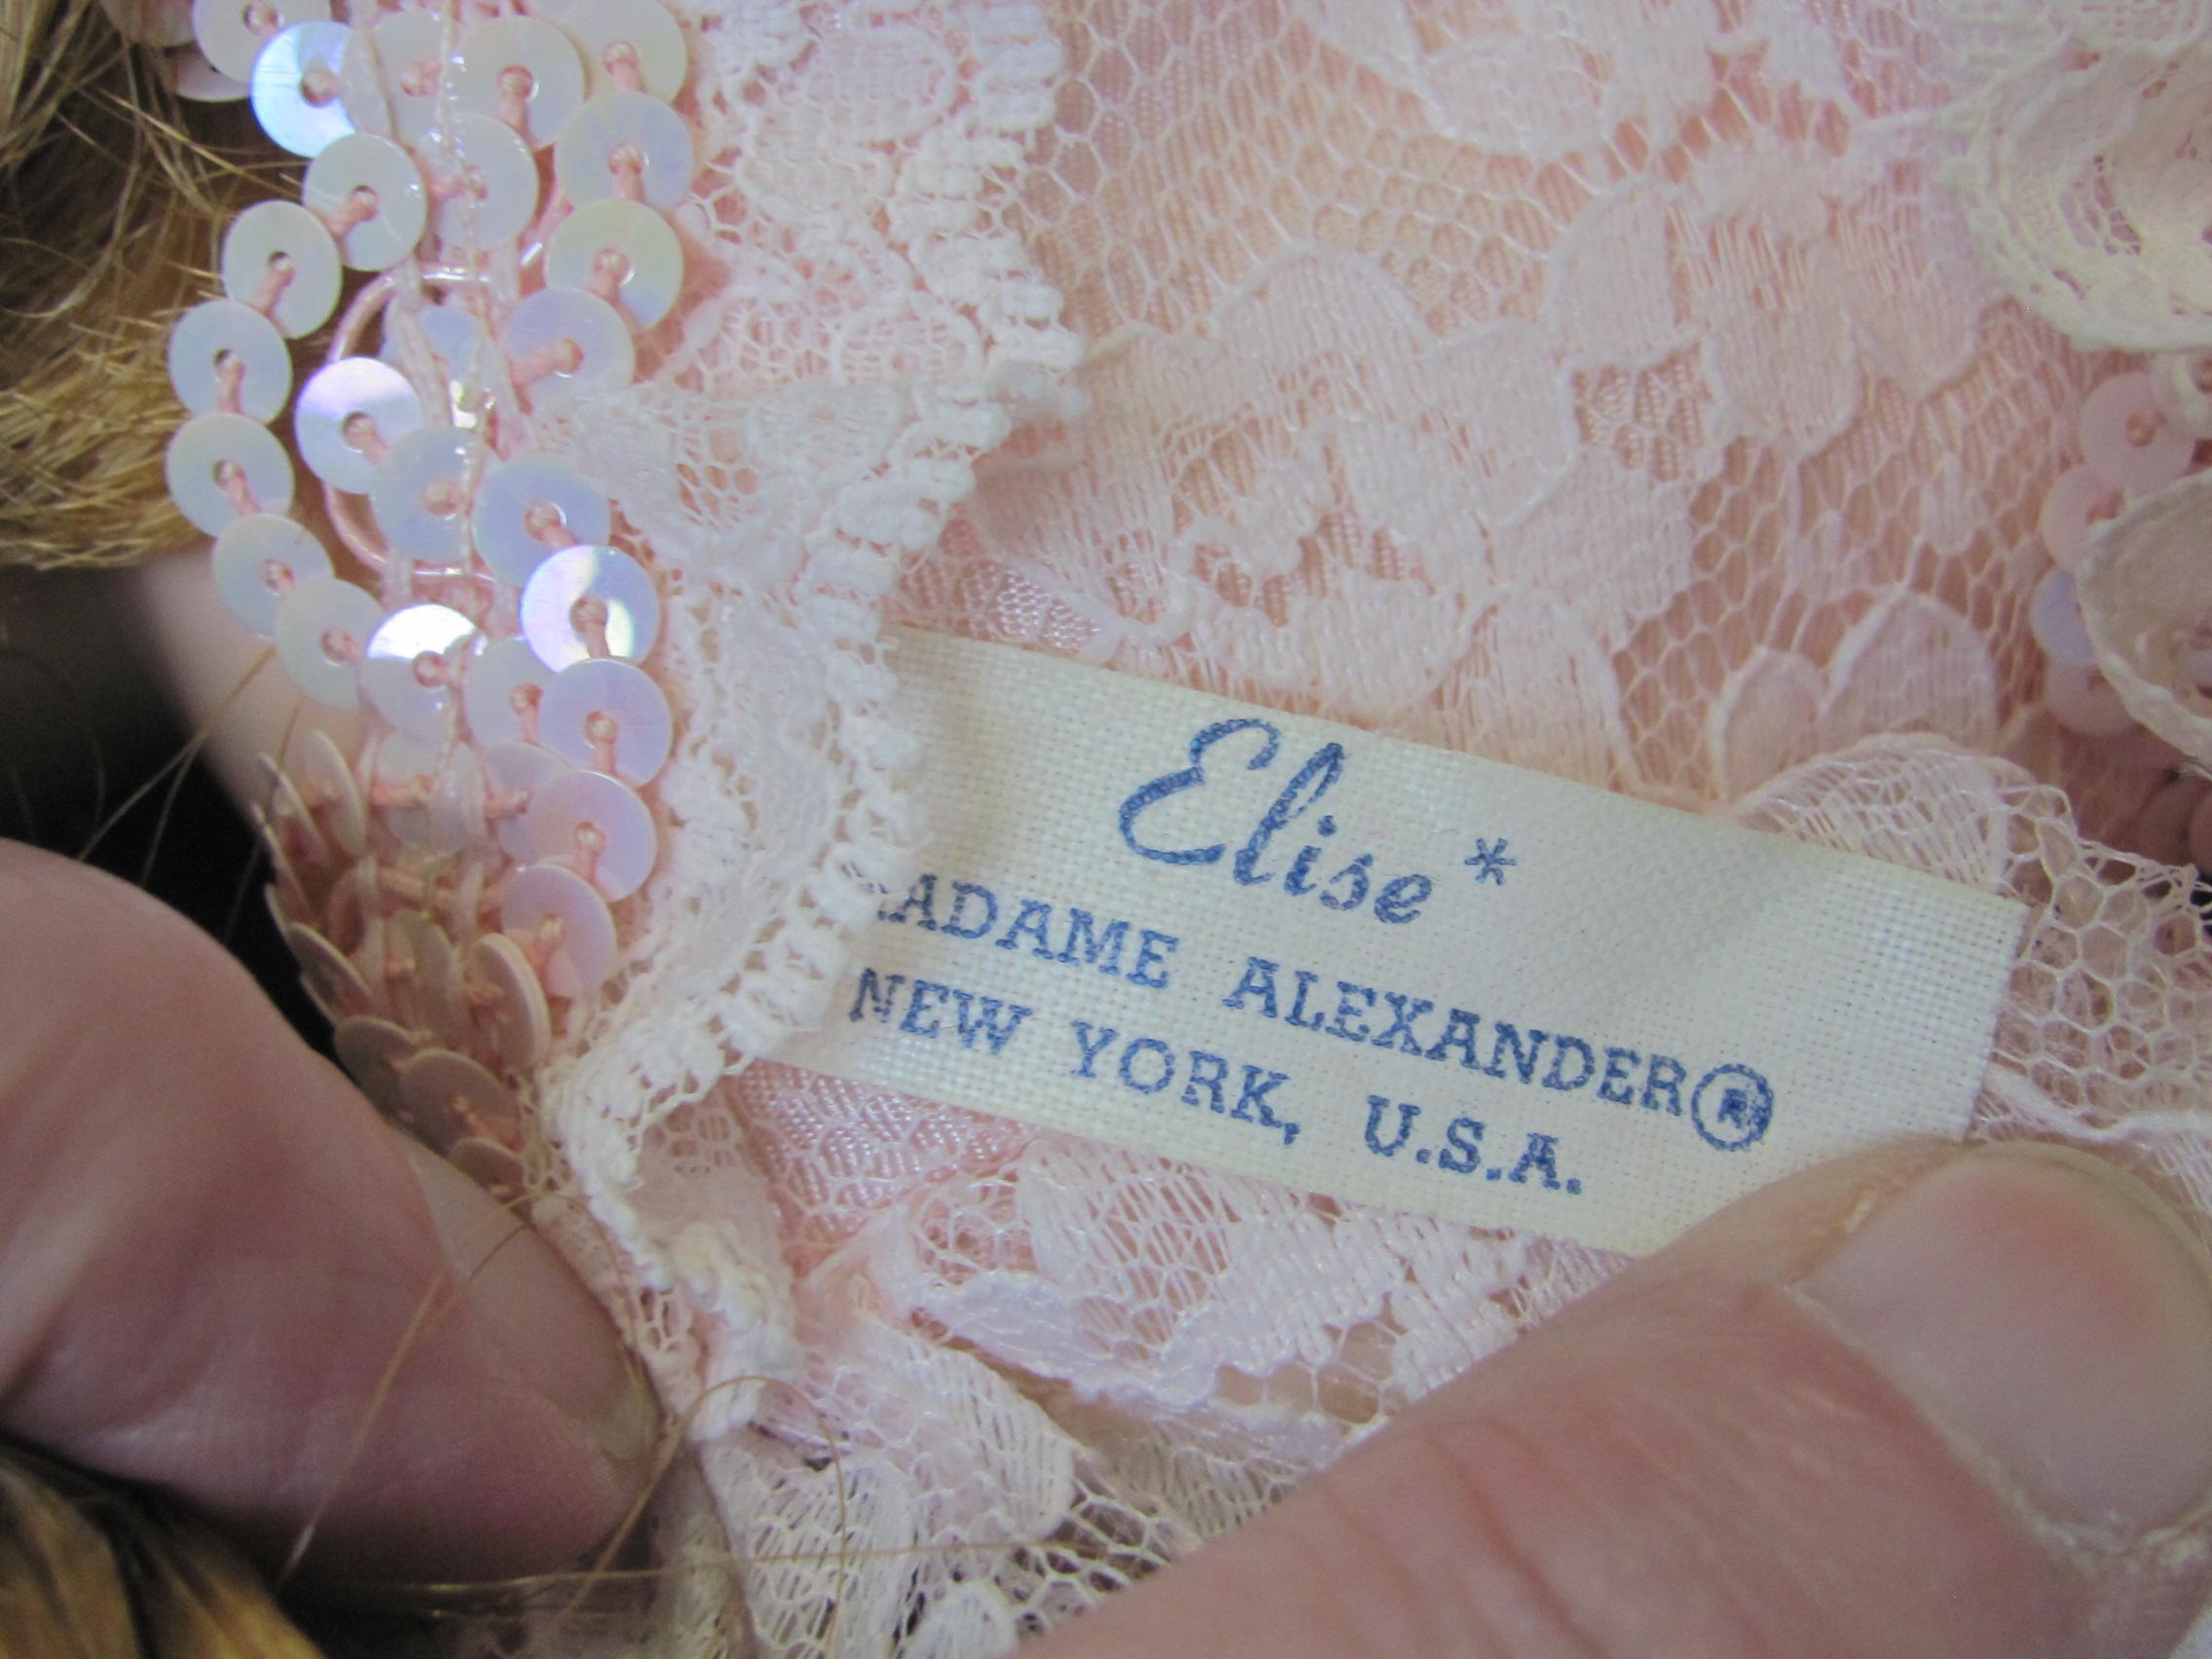 Vintage Plastic Madame Alexander Doll – Bridesmaid in Pink Dress – 17” - Missing Hat